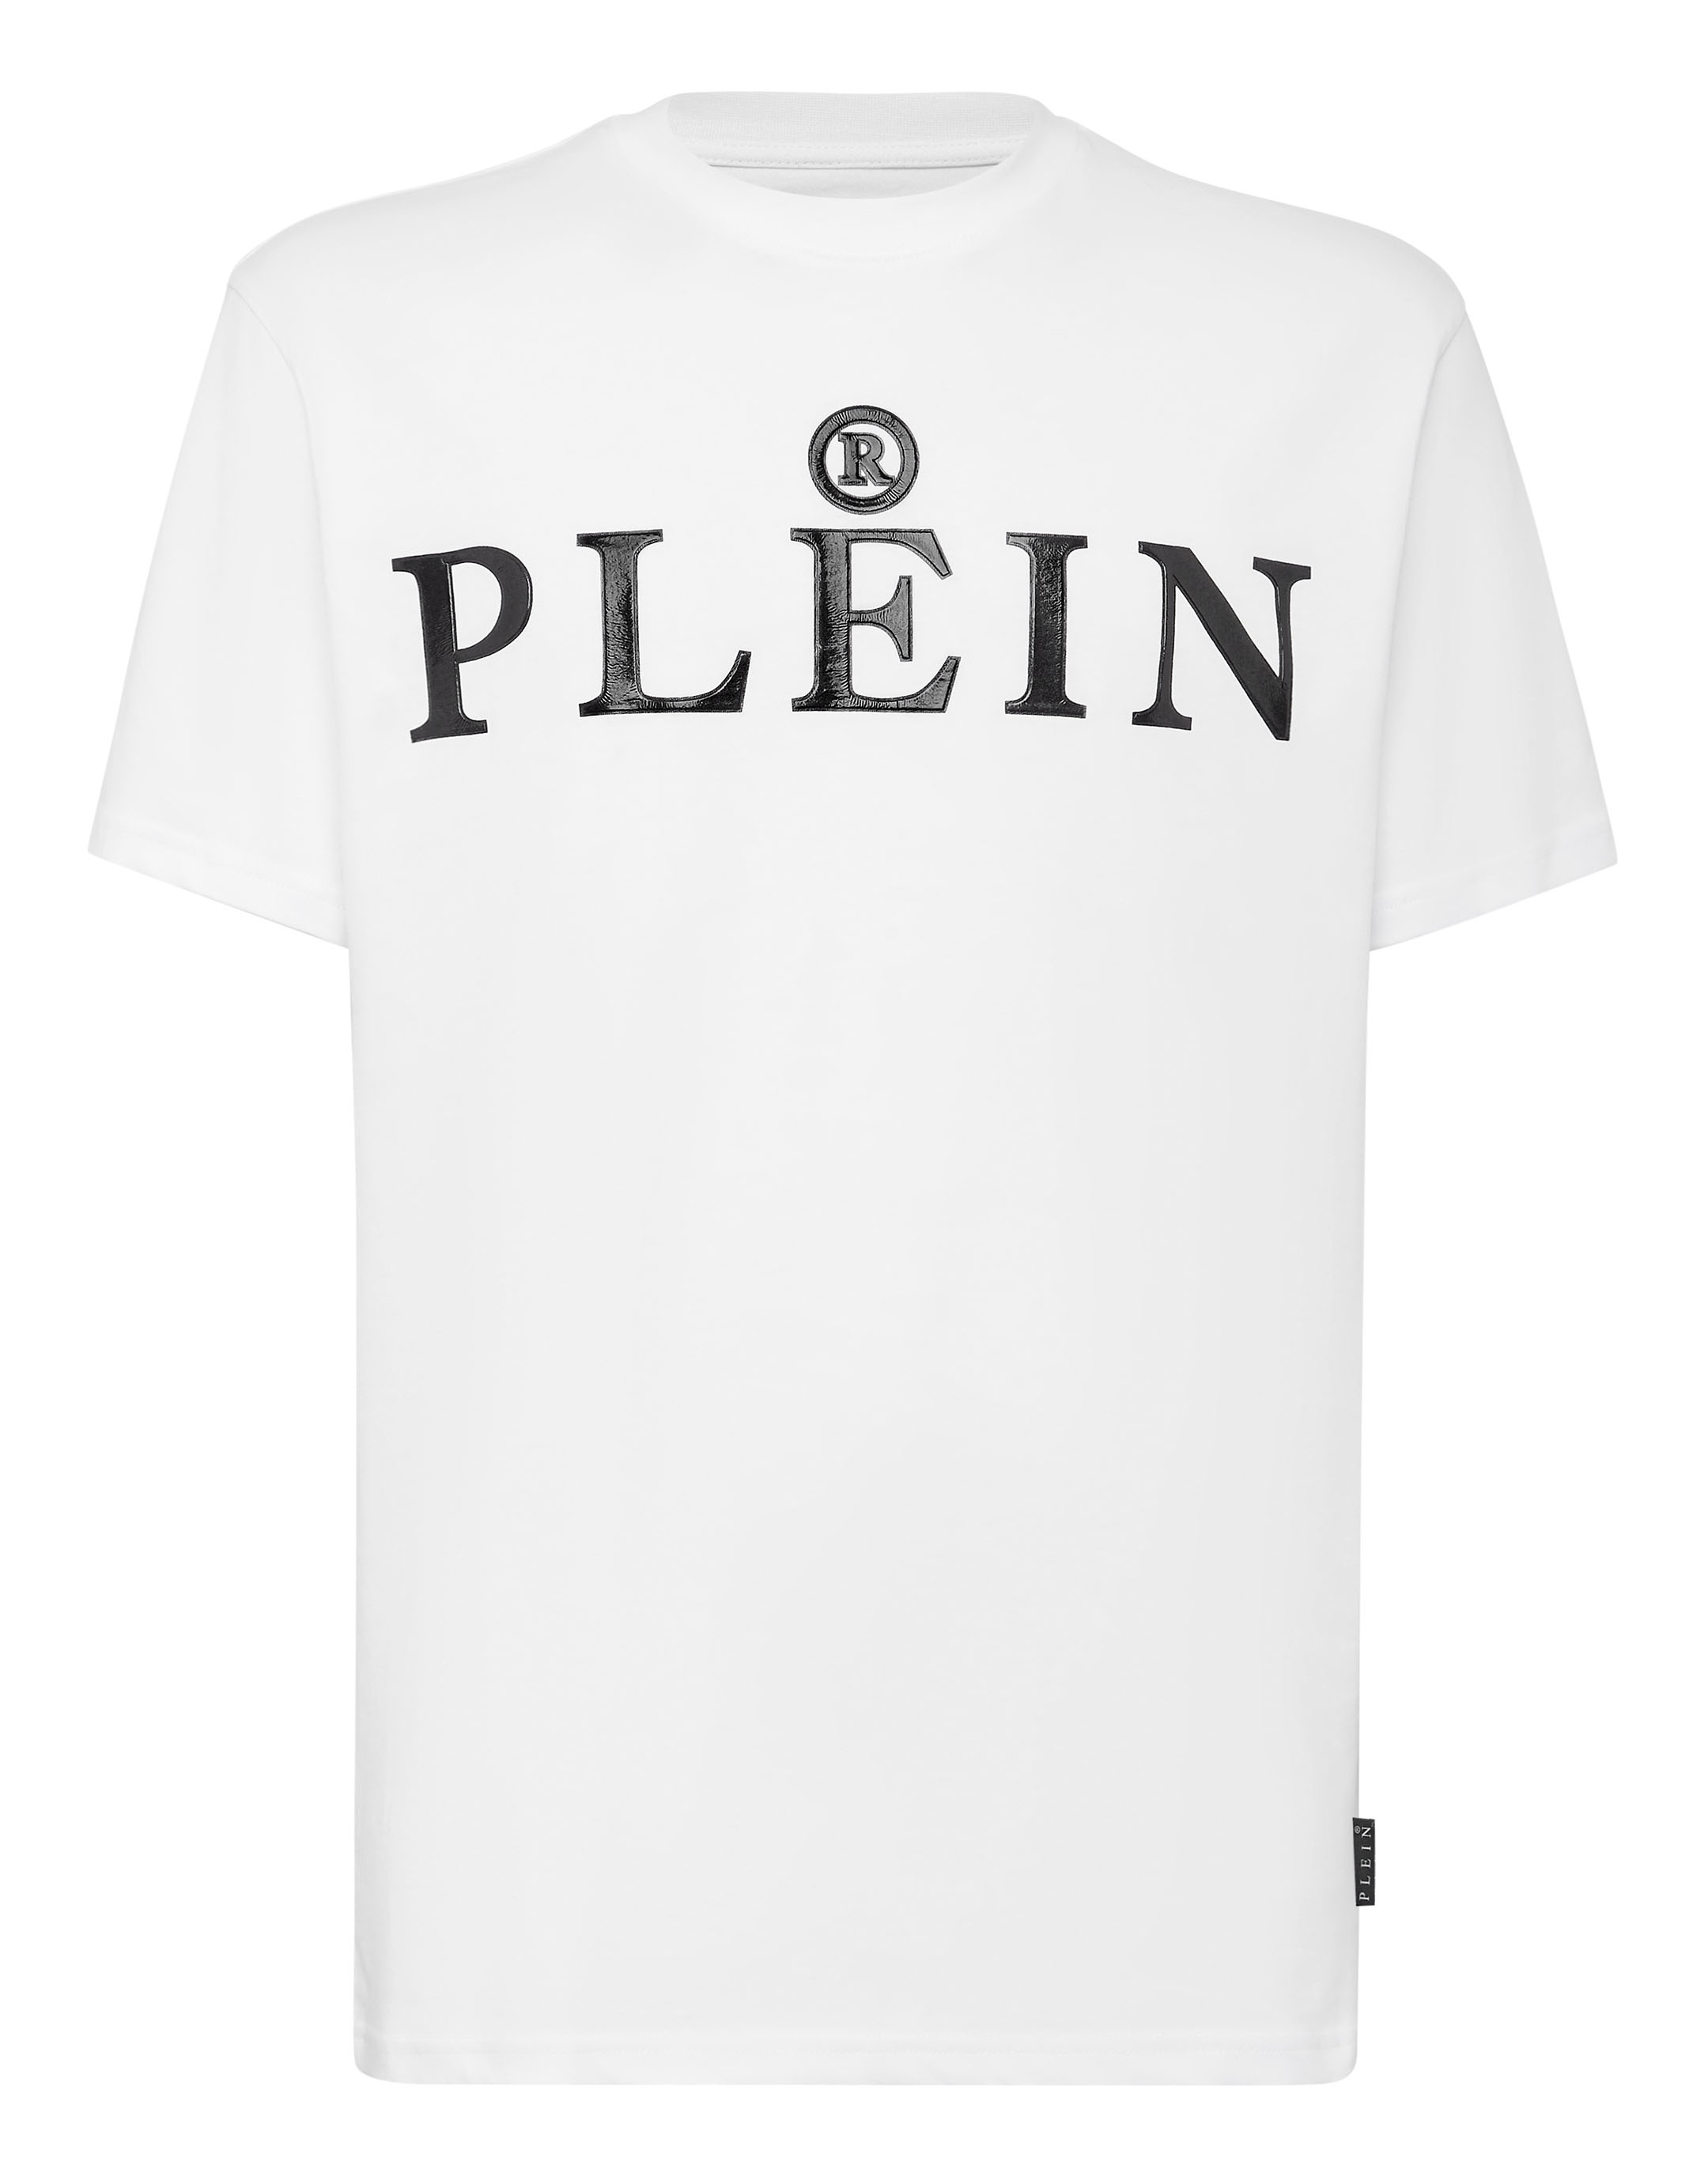 T-shirt Neck Philipp Plein TM | Philipp Plein